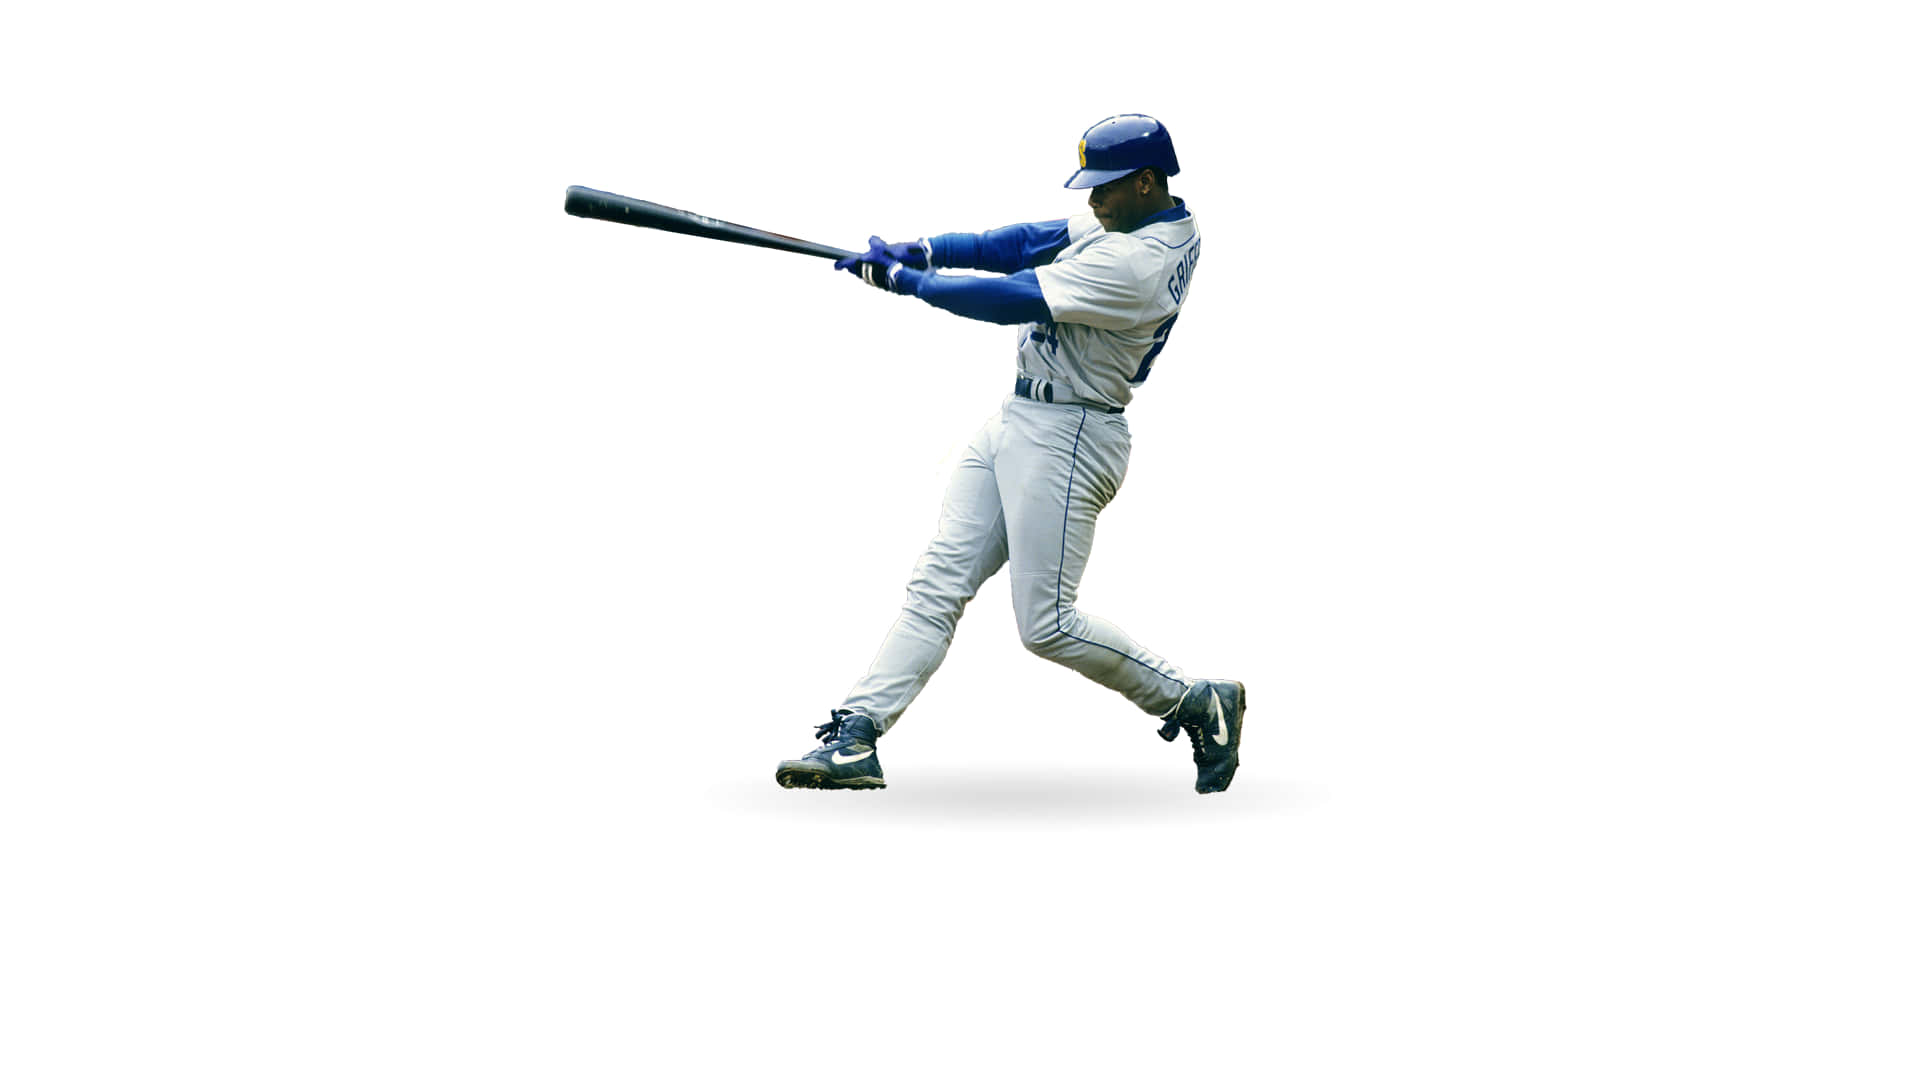 Legendary baseball player Ken Griffey Jr is pictured swinging a bat. Wallpaper